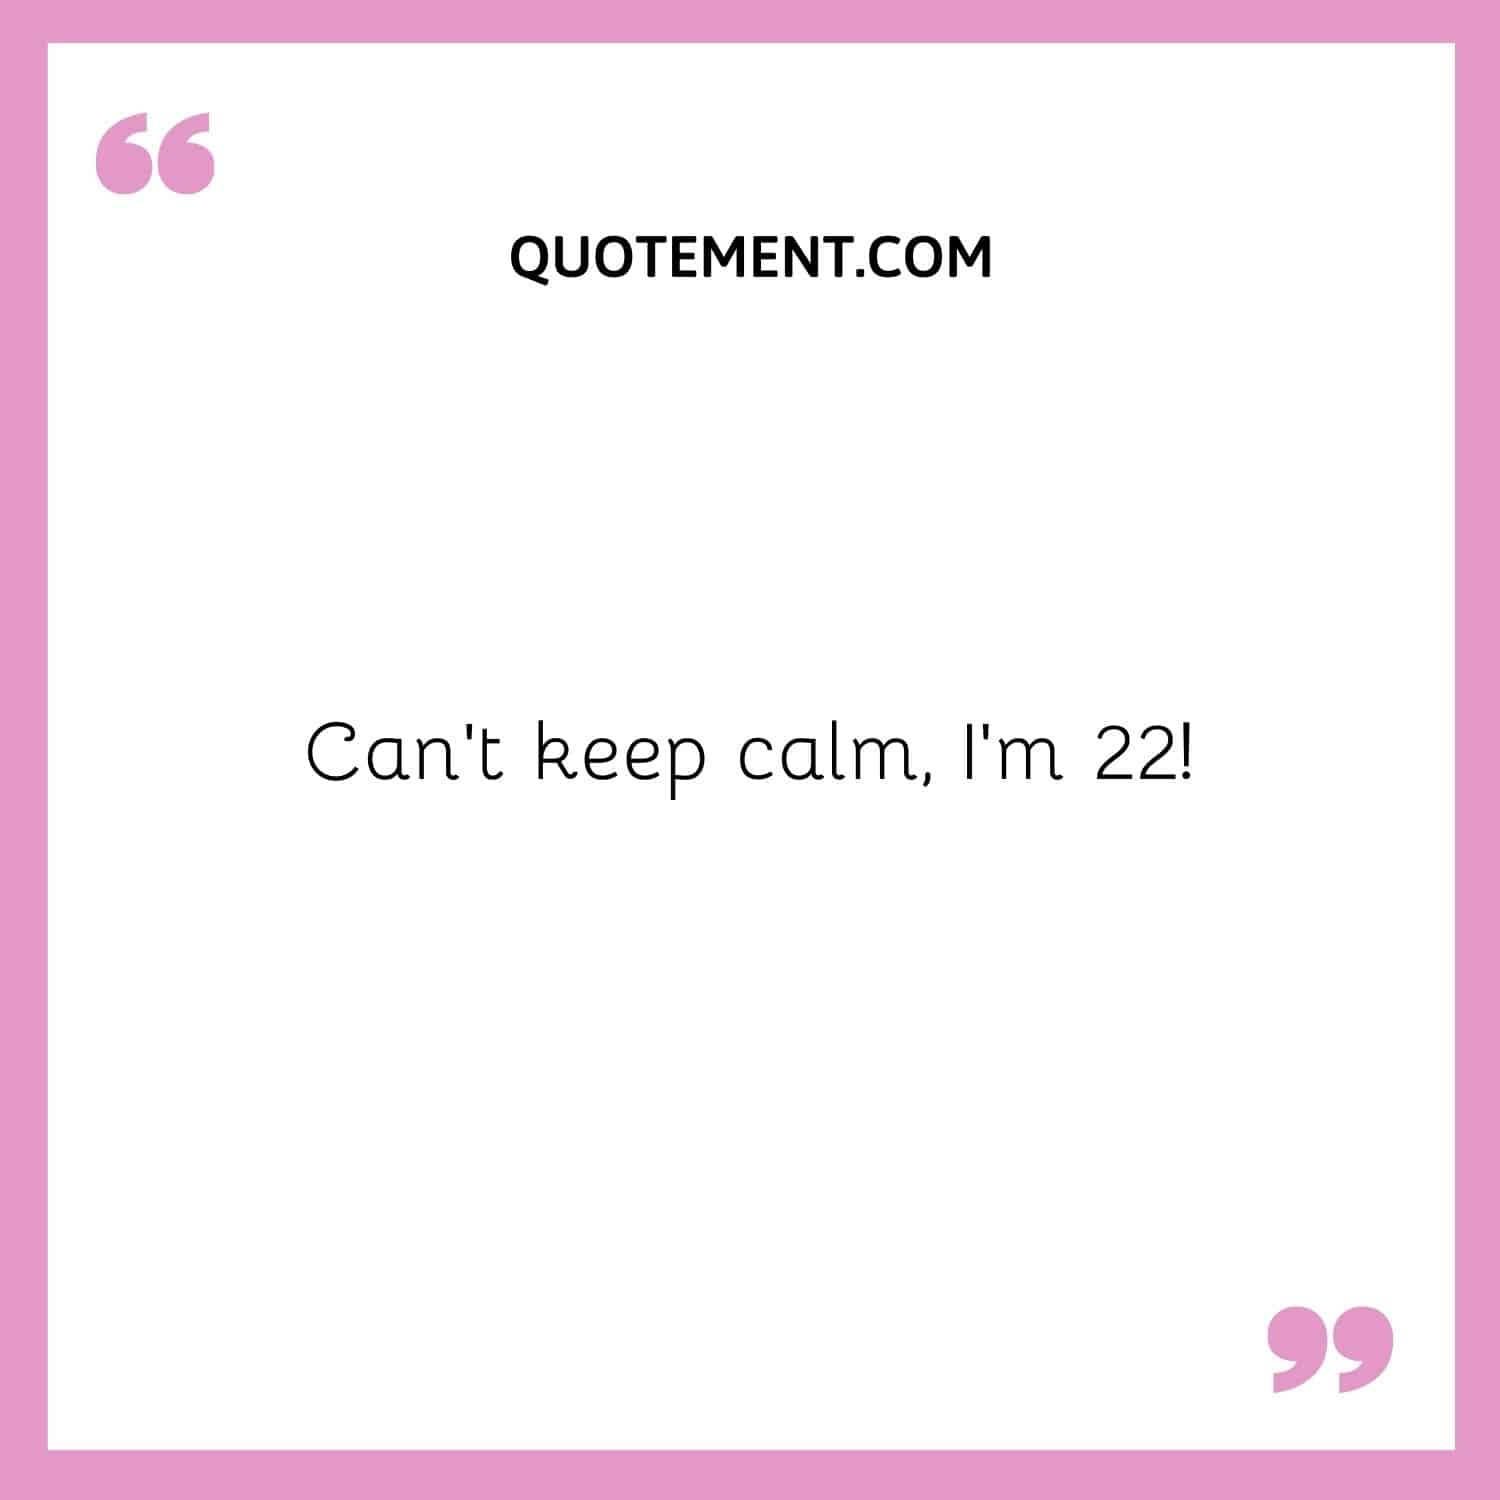 Can’t keep calm, I’m 22